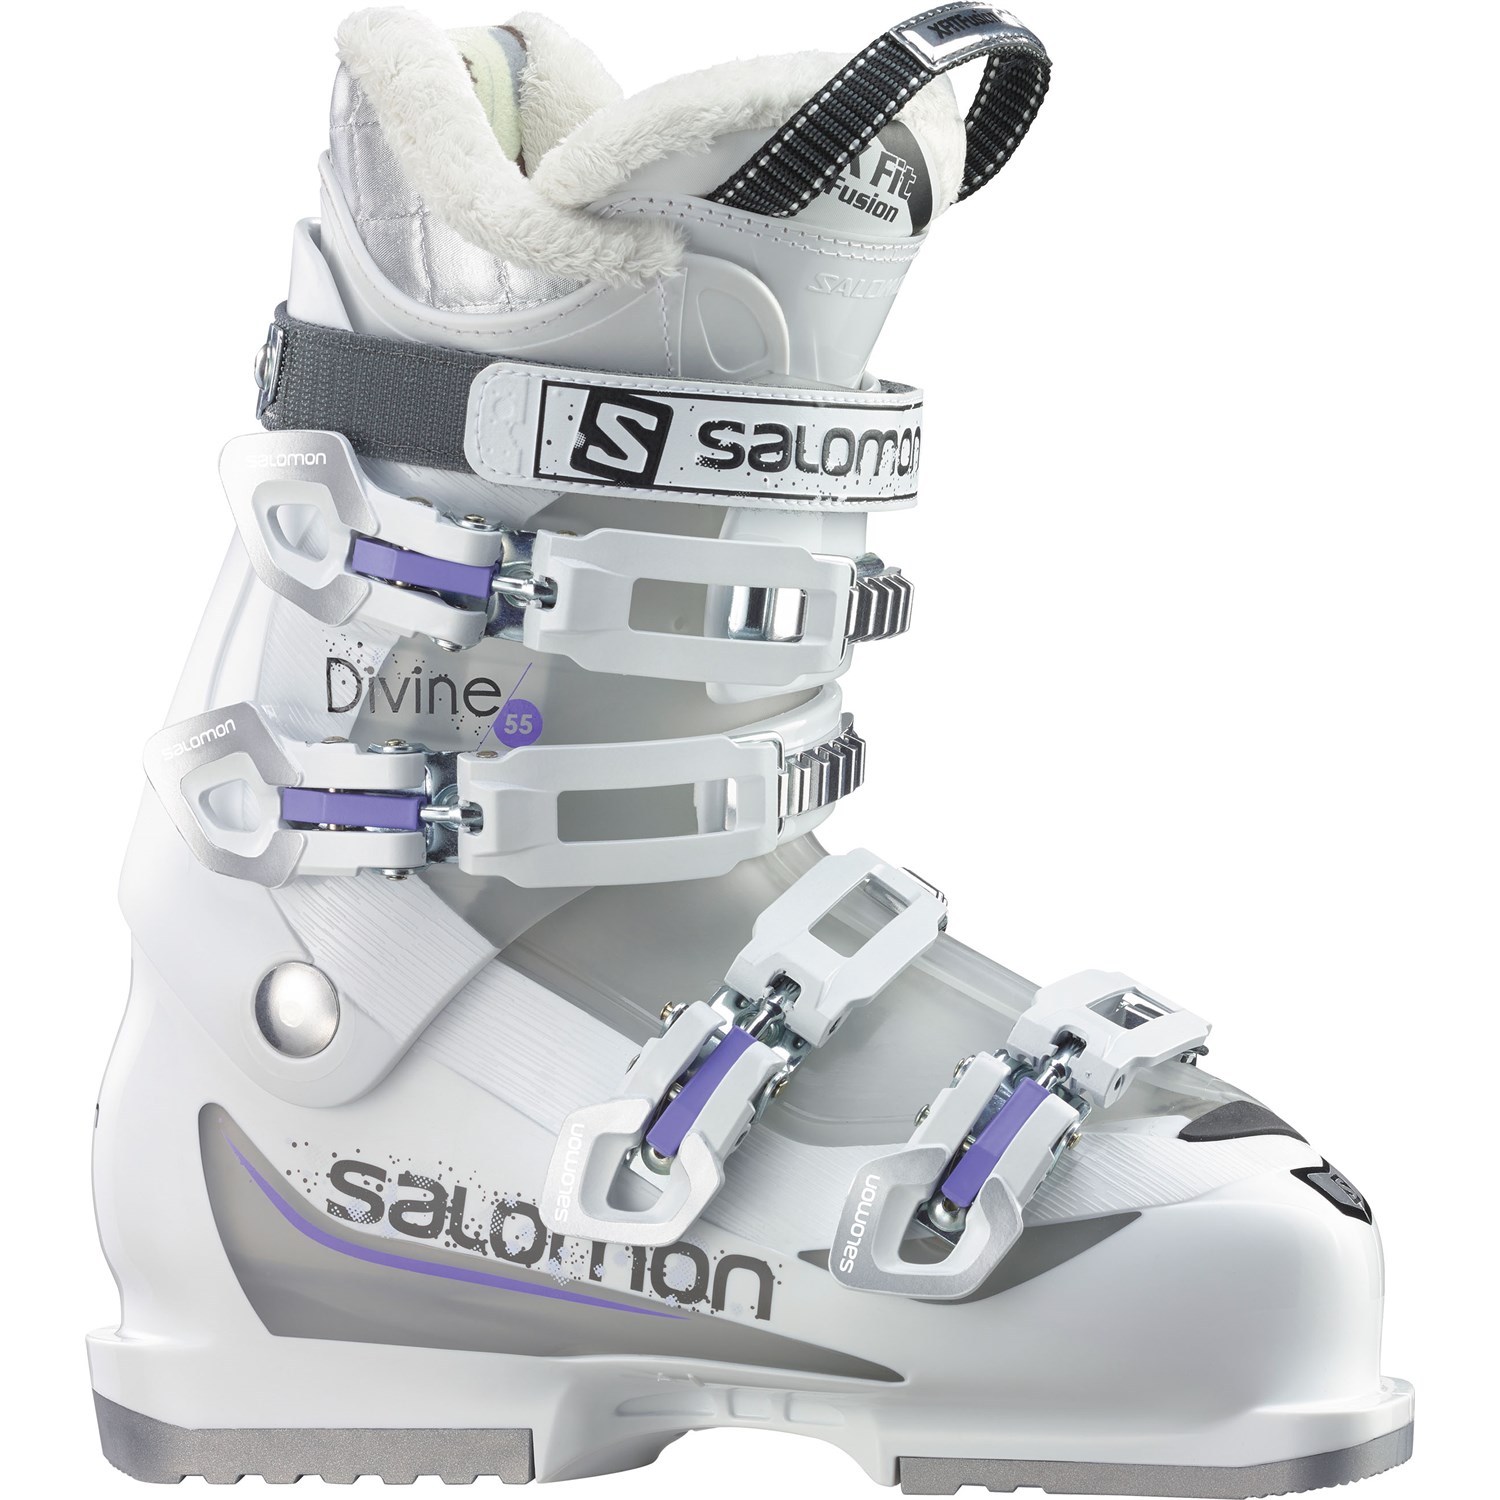 wapenkamer Kreta Medic Salomon Divine 55 Ski Boots - Women's 2017 | evo